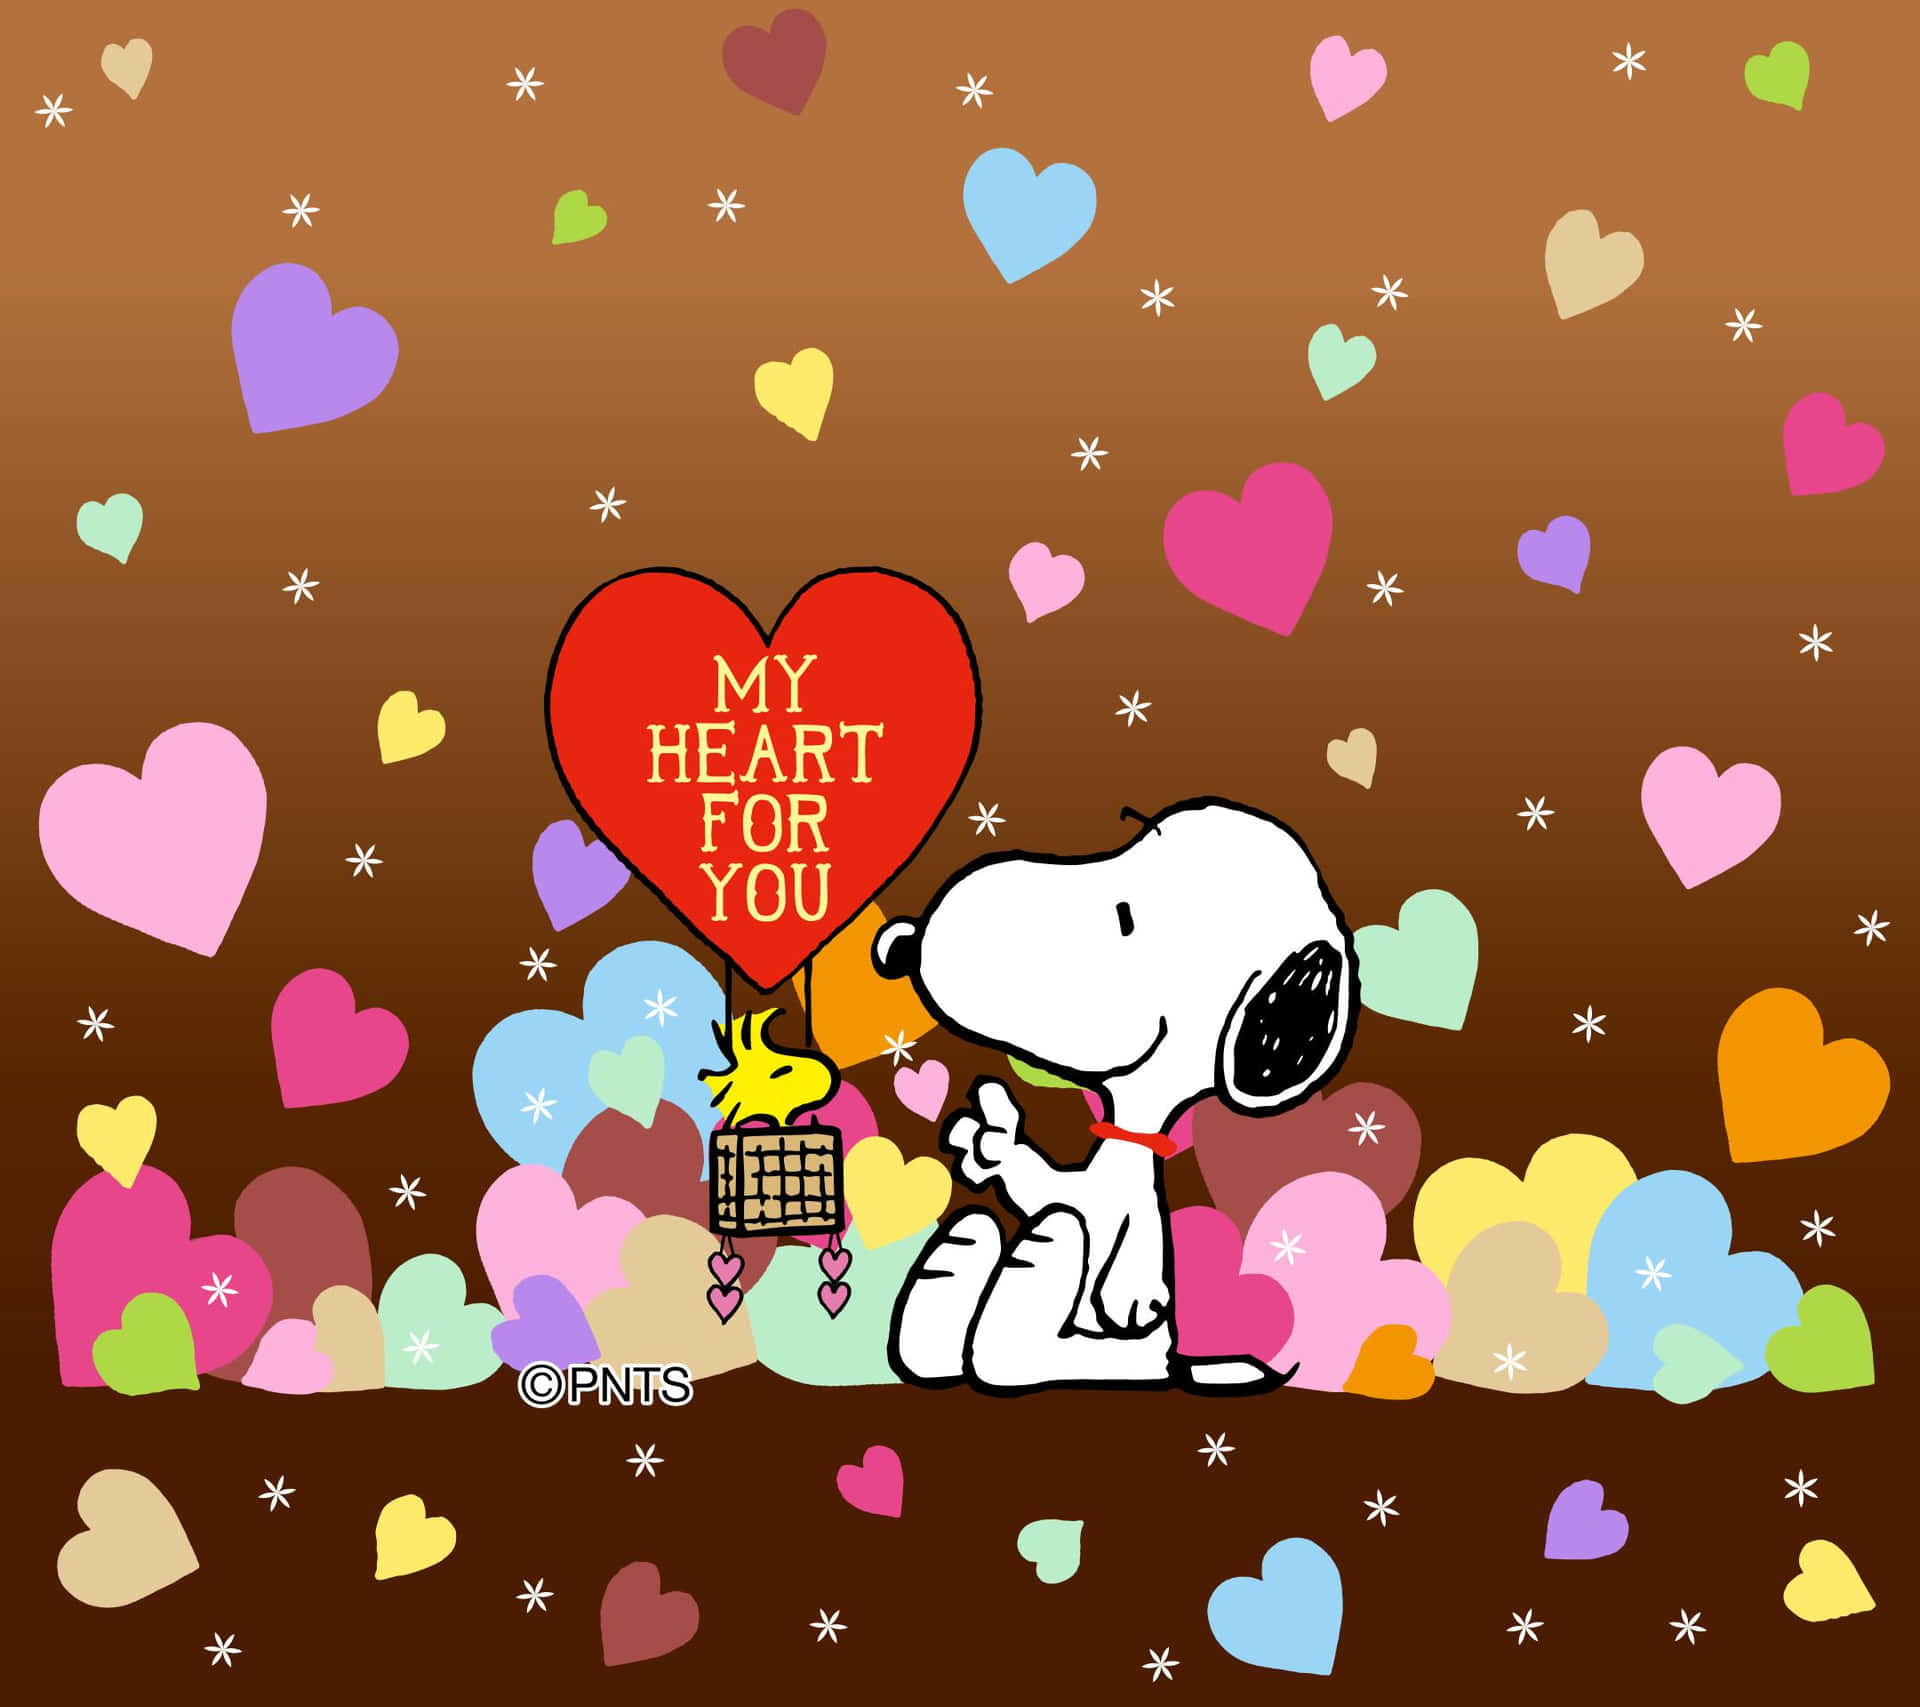 The lovable beagle, Snoopy